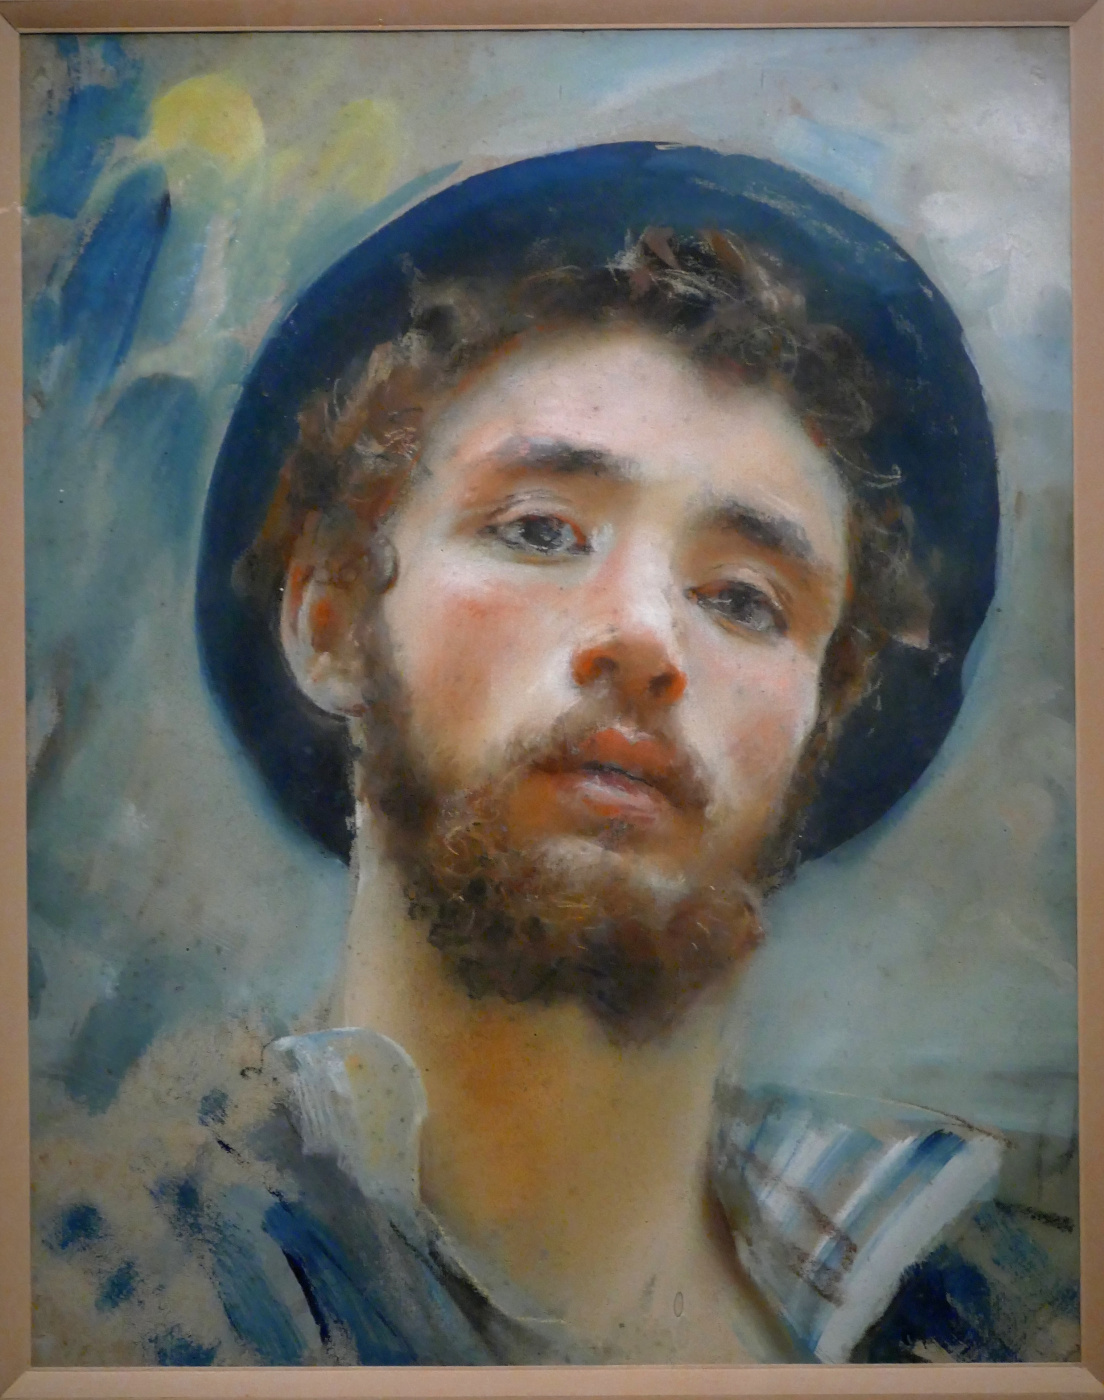 Francesco Paolo Michetti. Self-portrait at around 26 years old